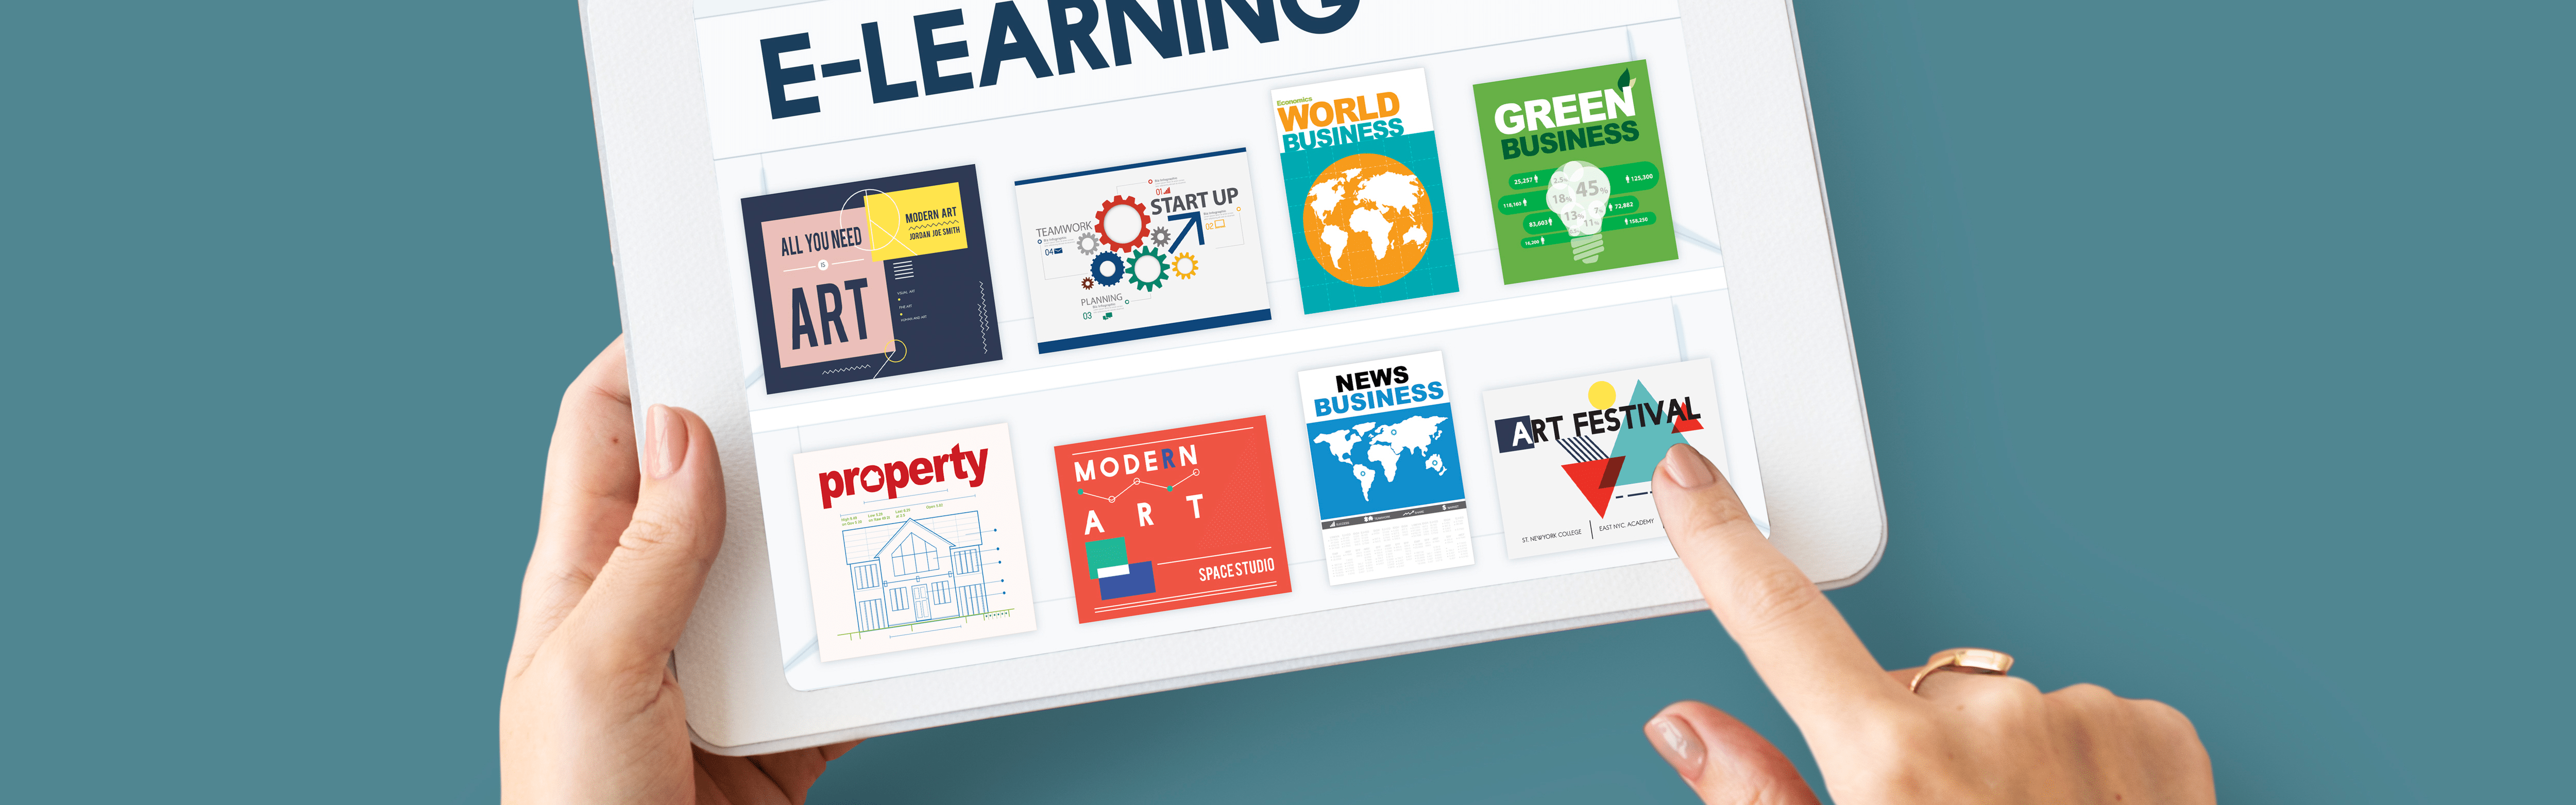 El ABC de e-learning